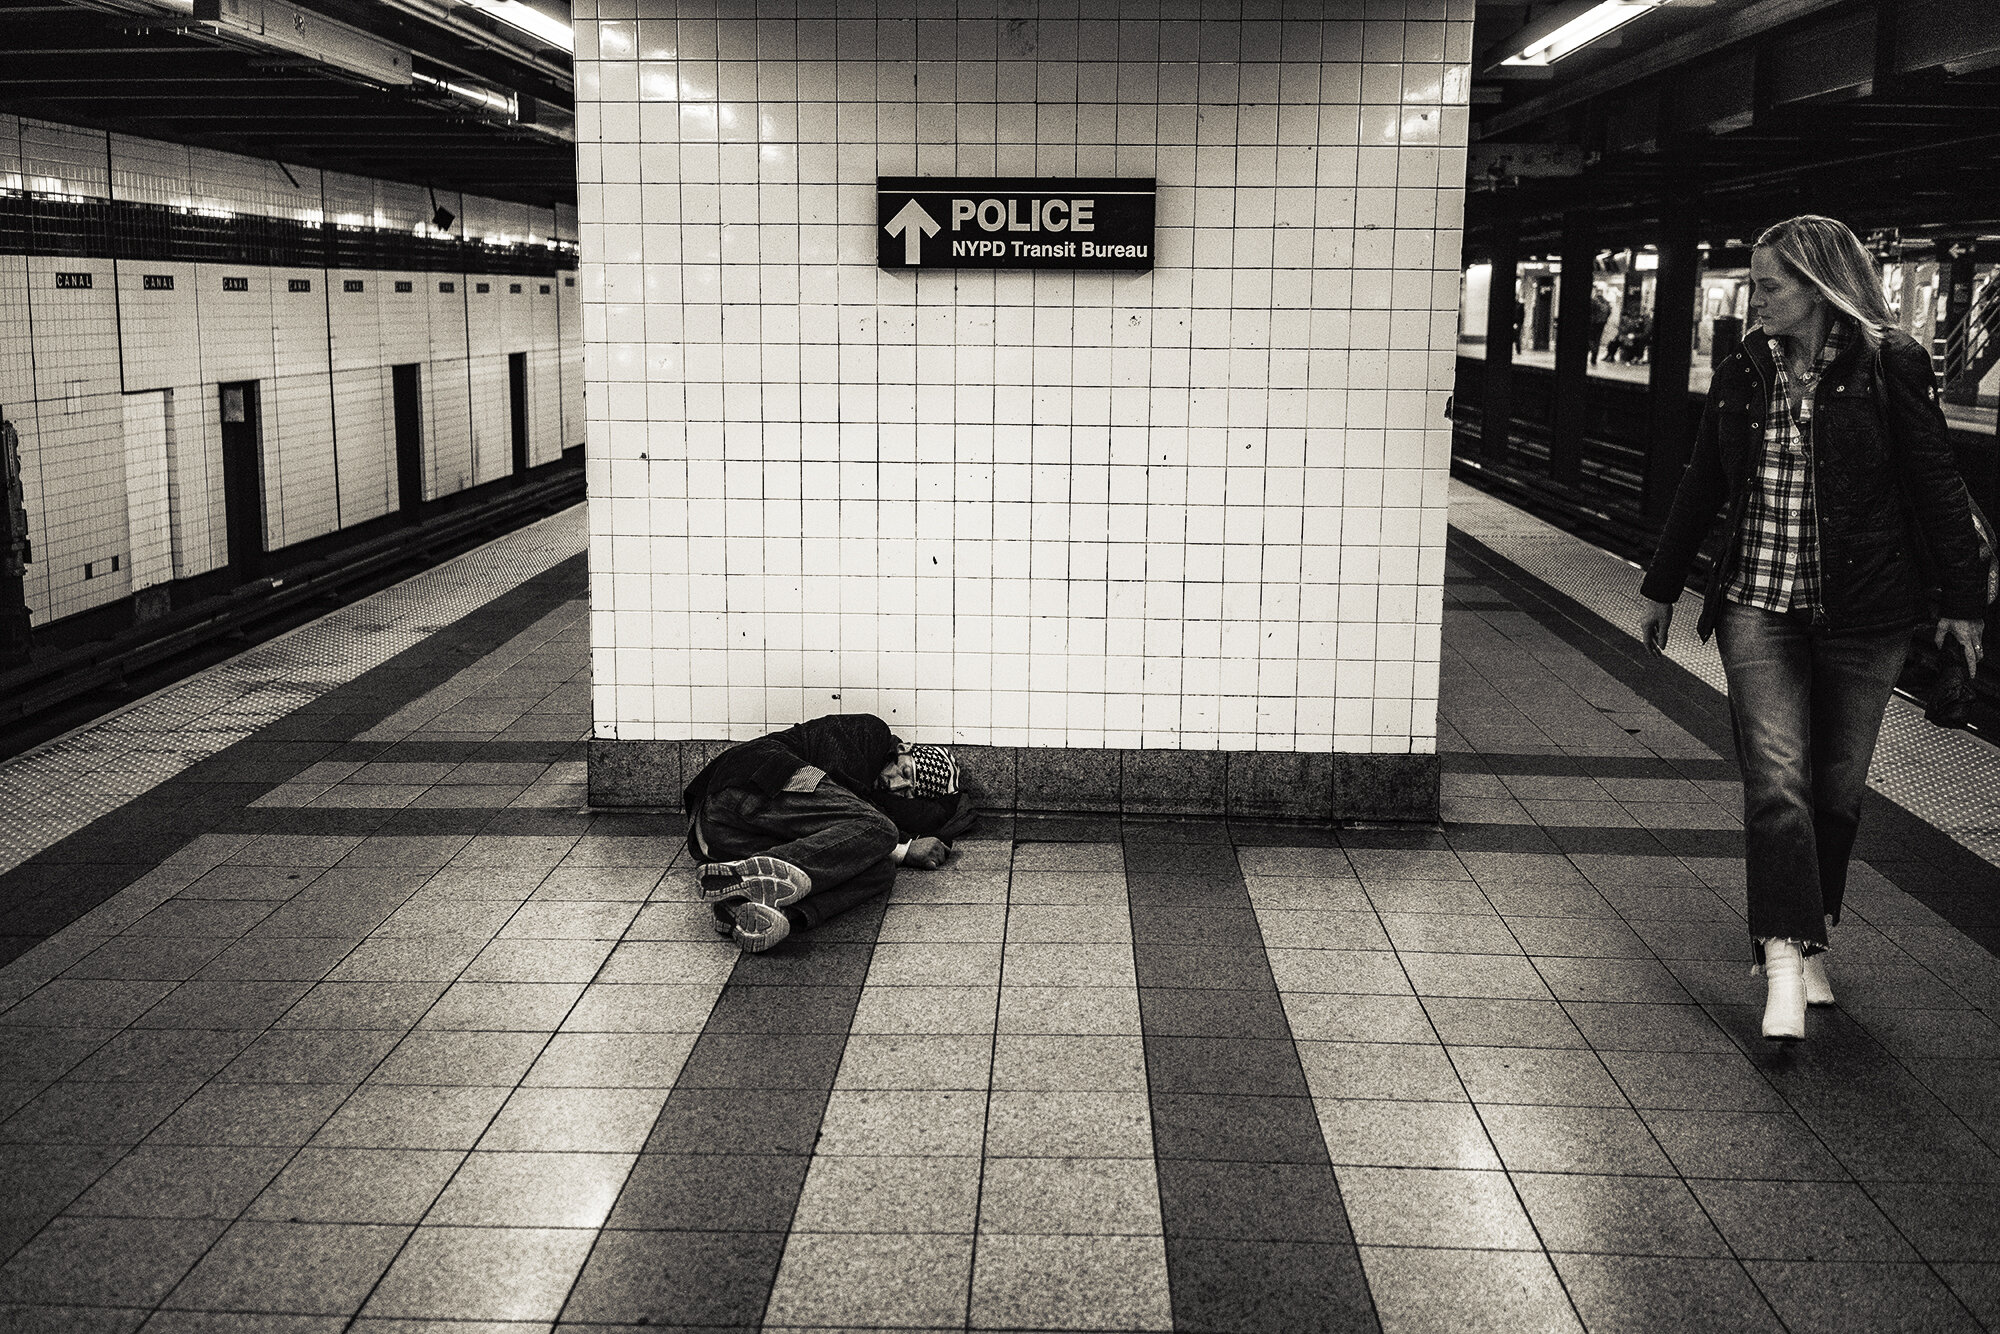 Brklyn_Subway_2019_Homeless_American_Bandana-005.jpg